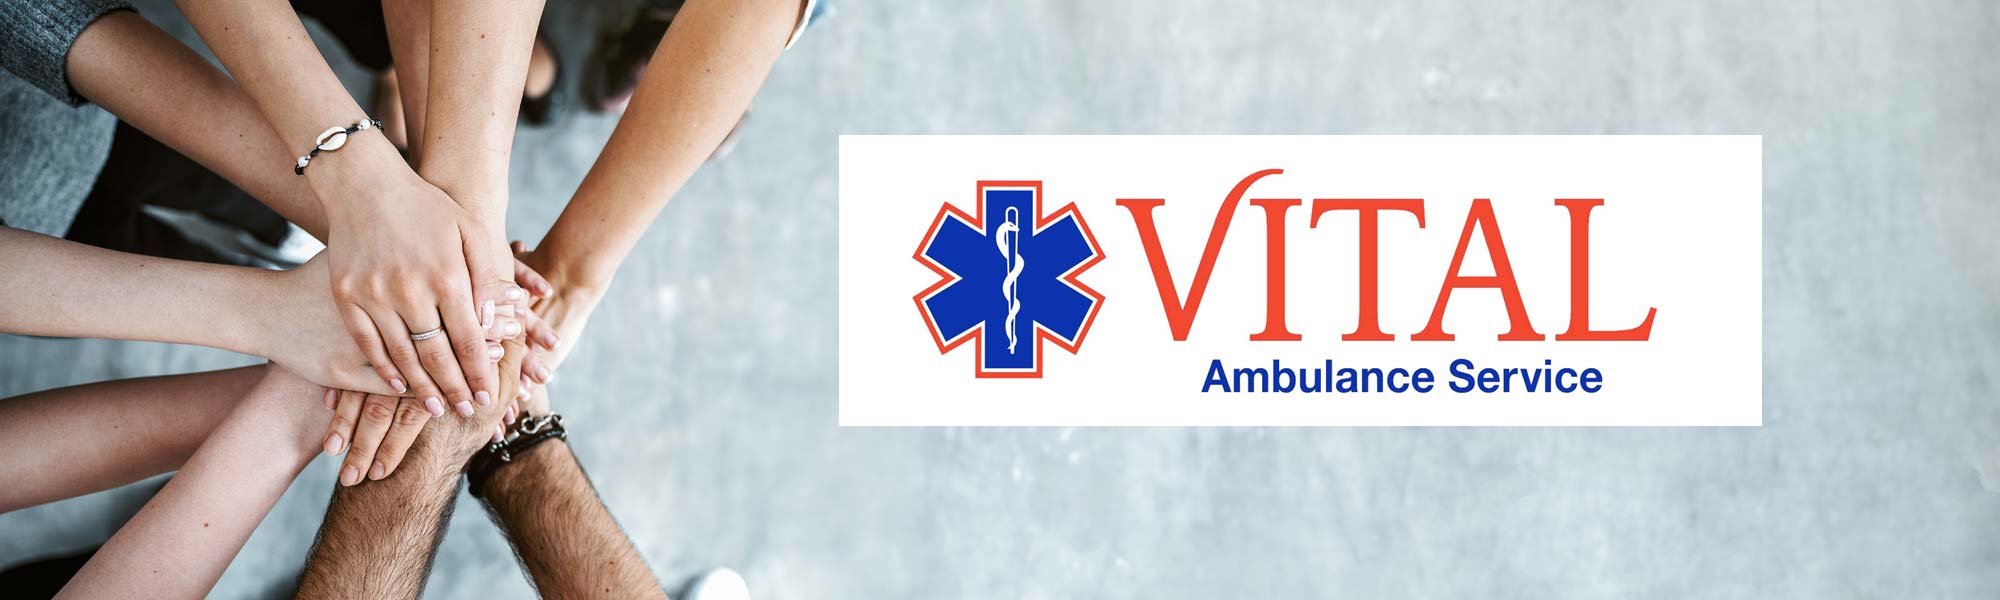 Join the Vital Ambulance team